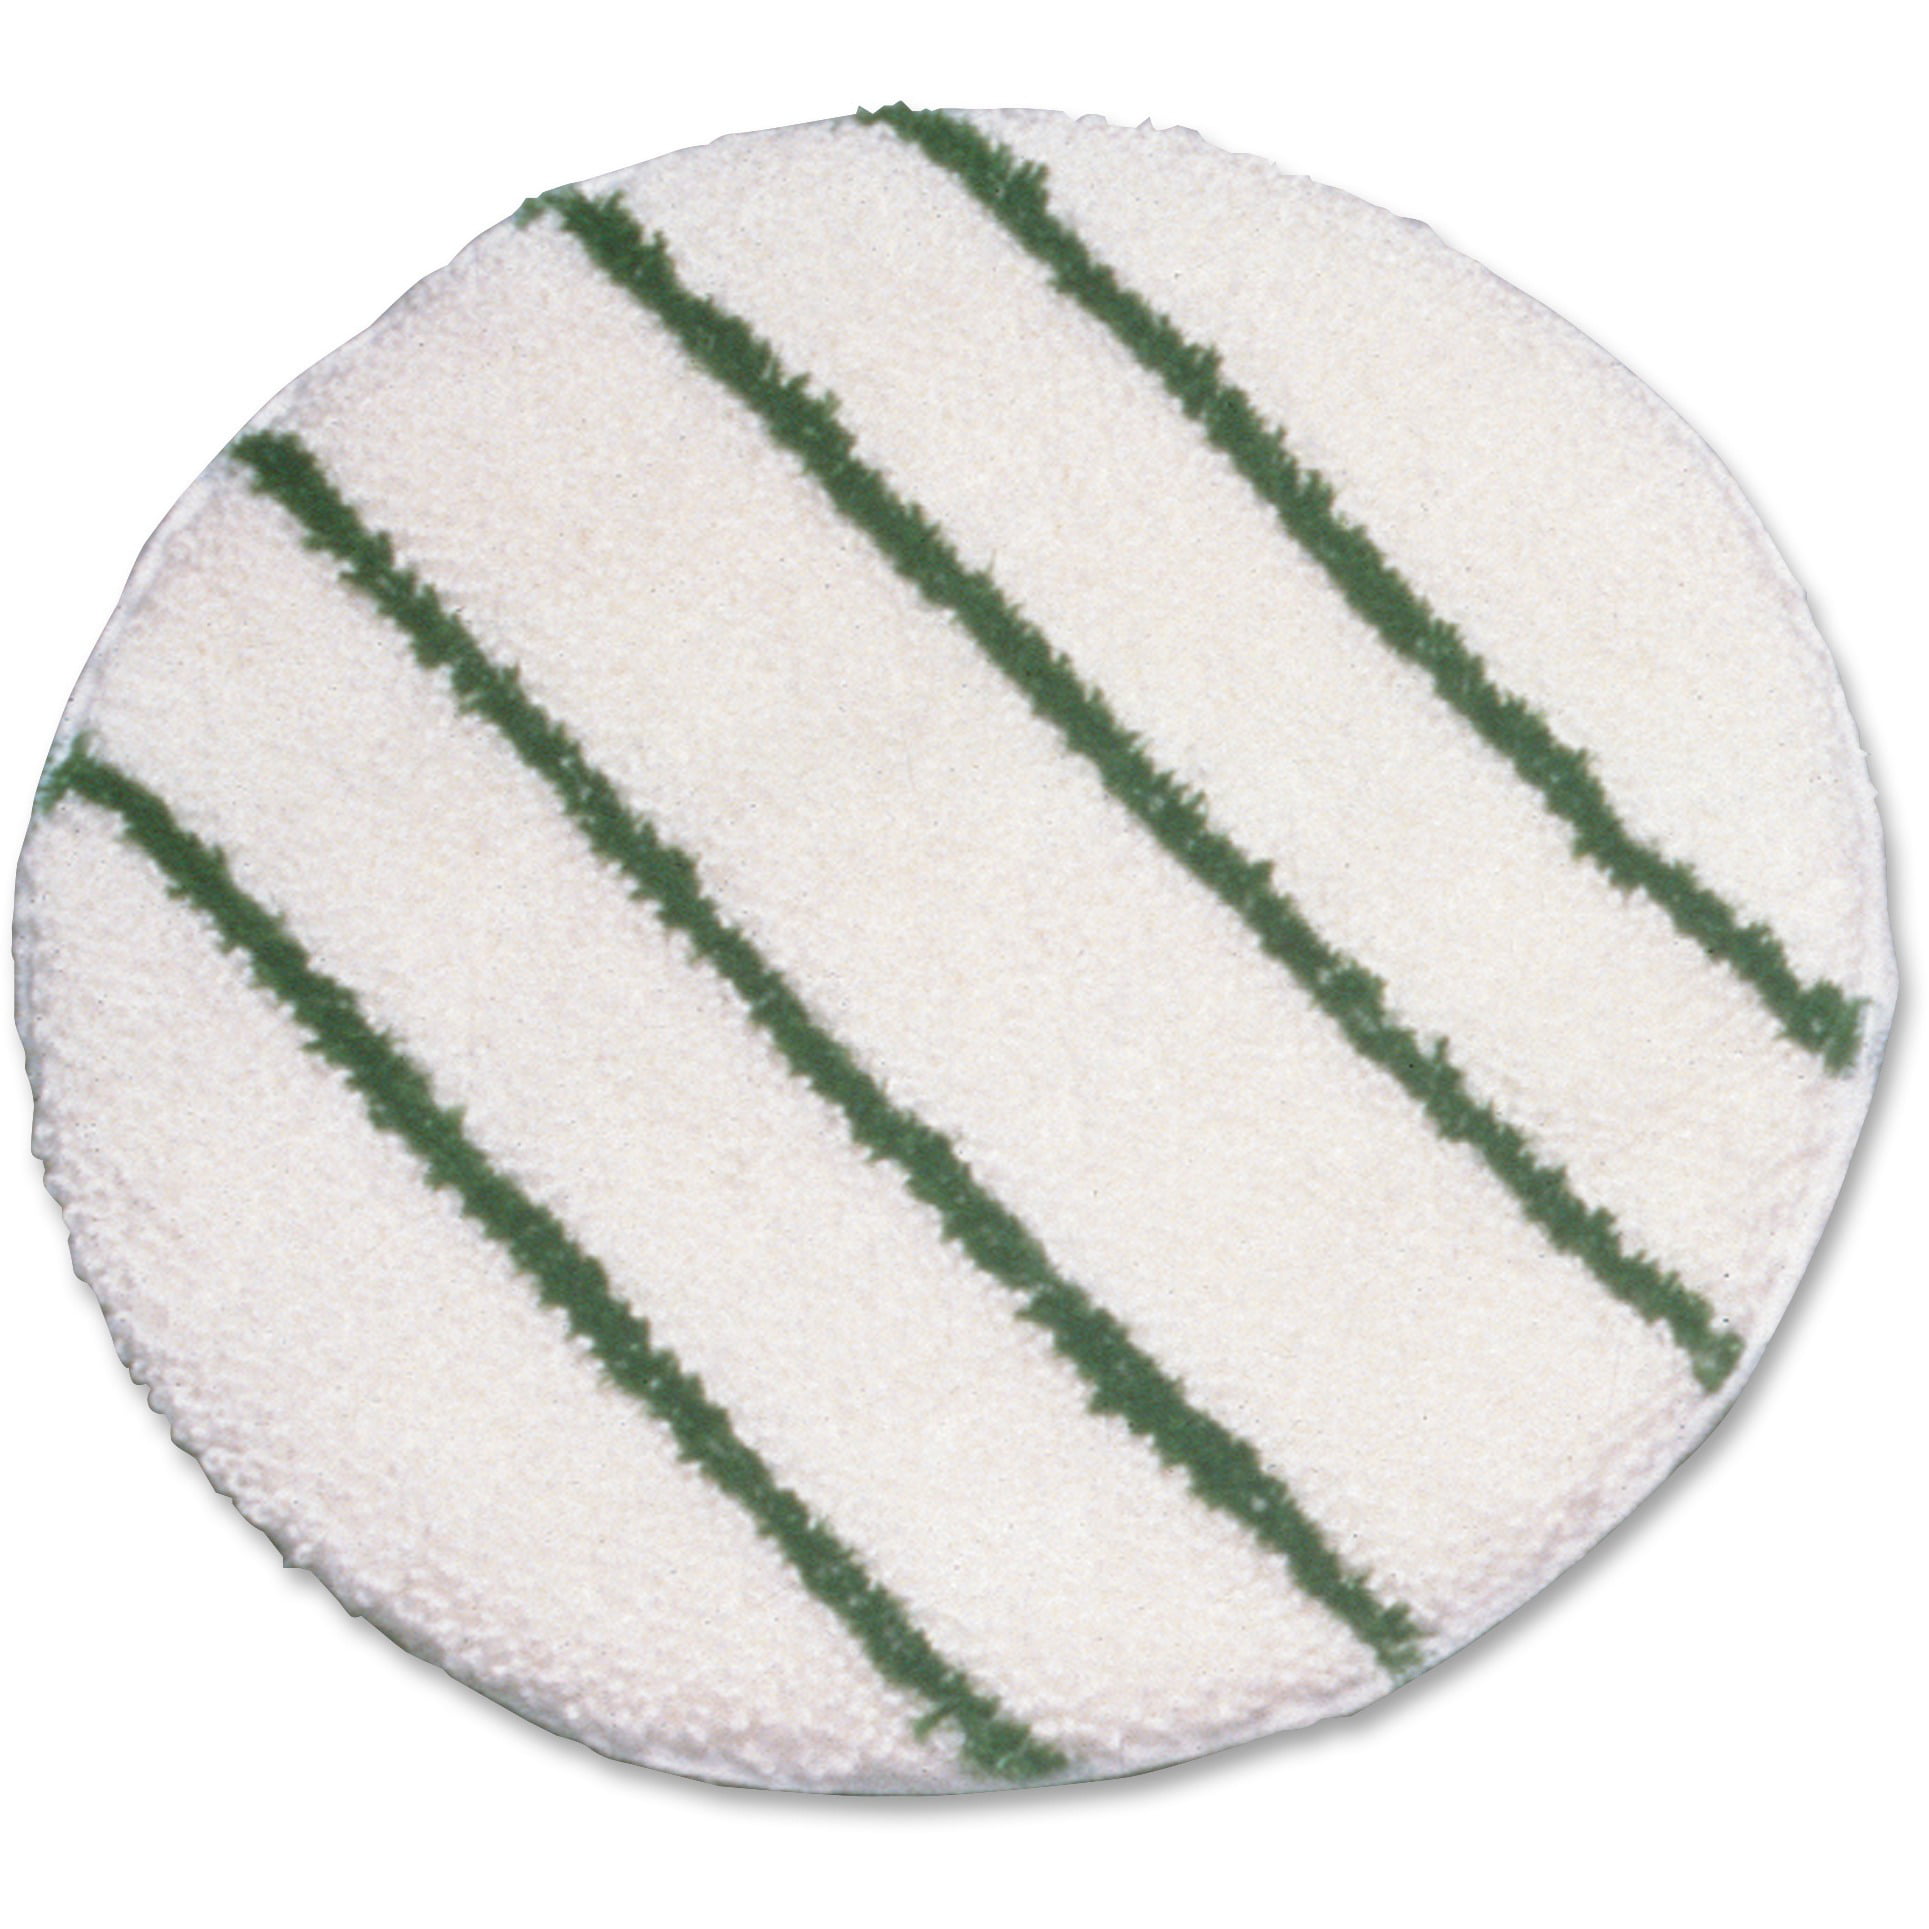 21 In RUBBERMAID FGP27100WH00 Carpet Bonnet White w/Green Stripe 